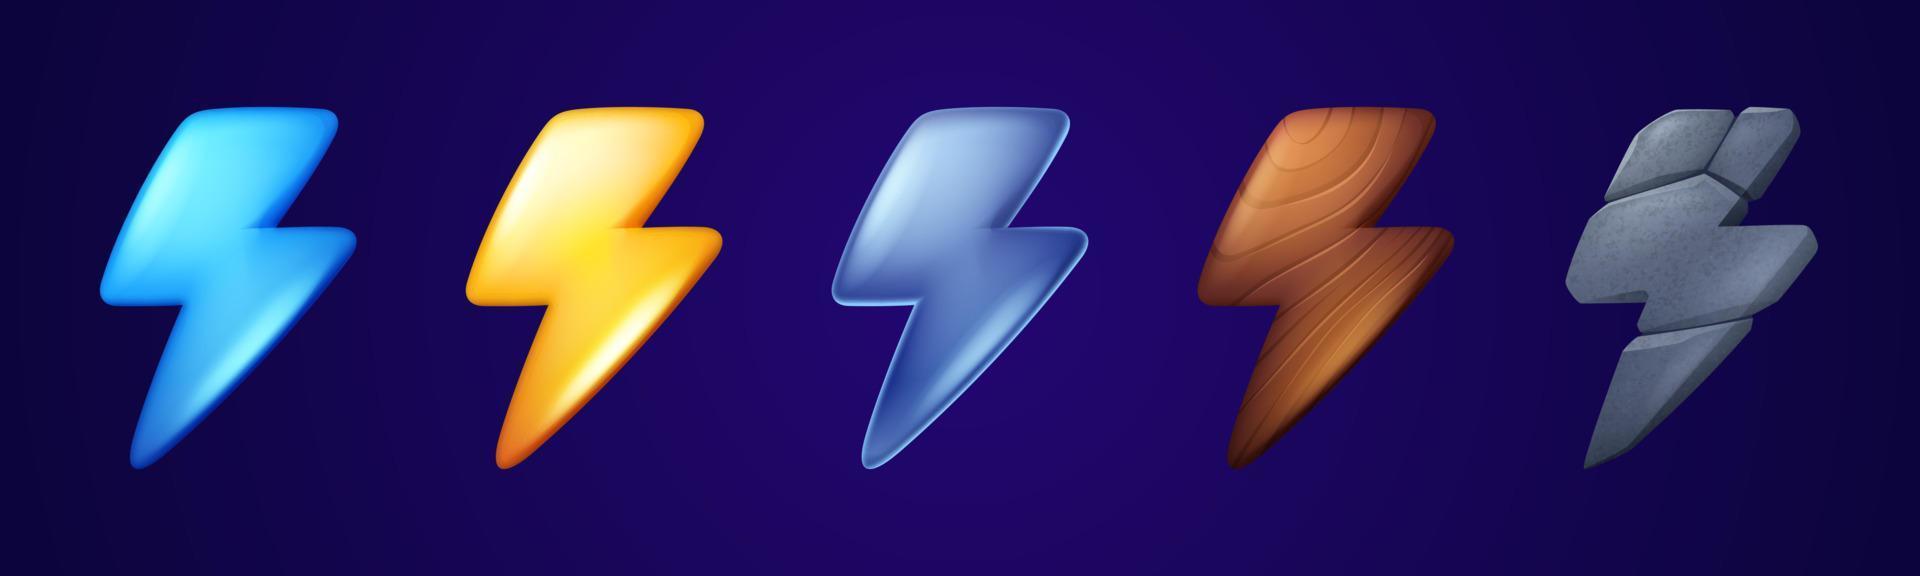 Lightning, thunderbolt game icons vector